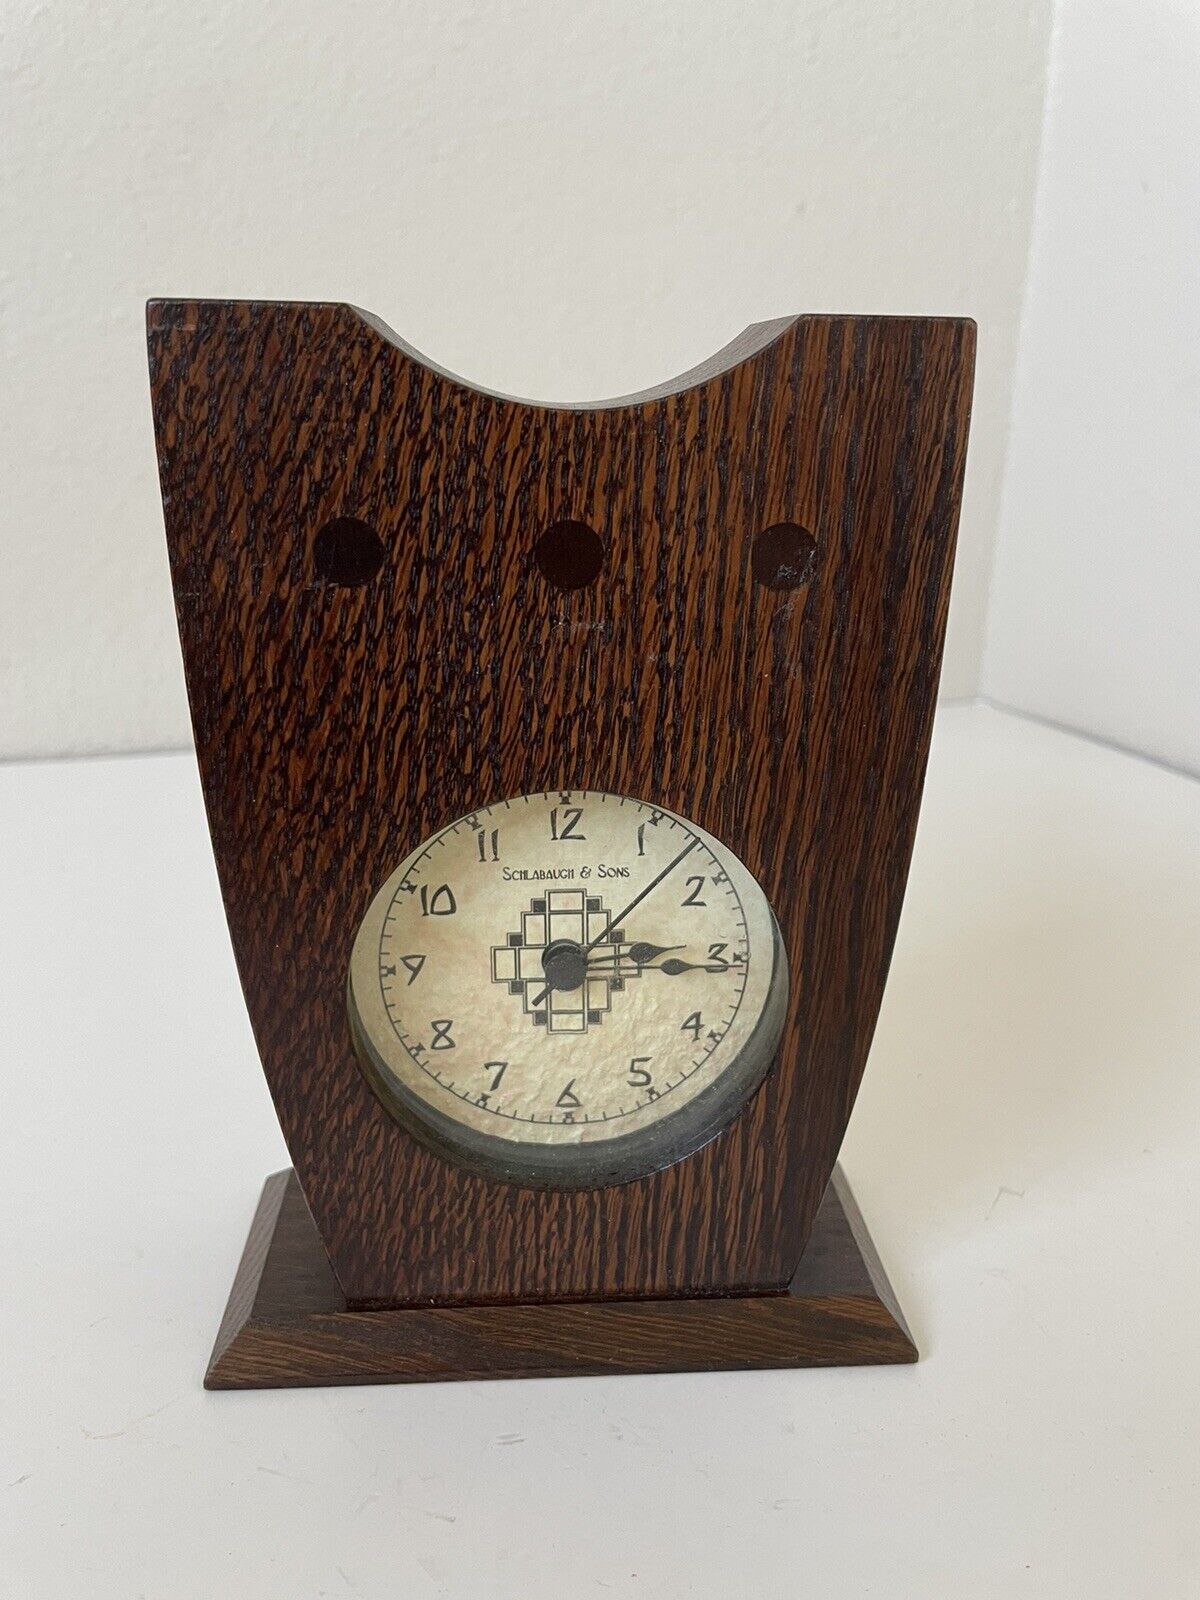 Schlabaugh & Sons Clock Art Sculpture Wood  Mantel Carved